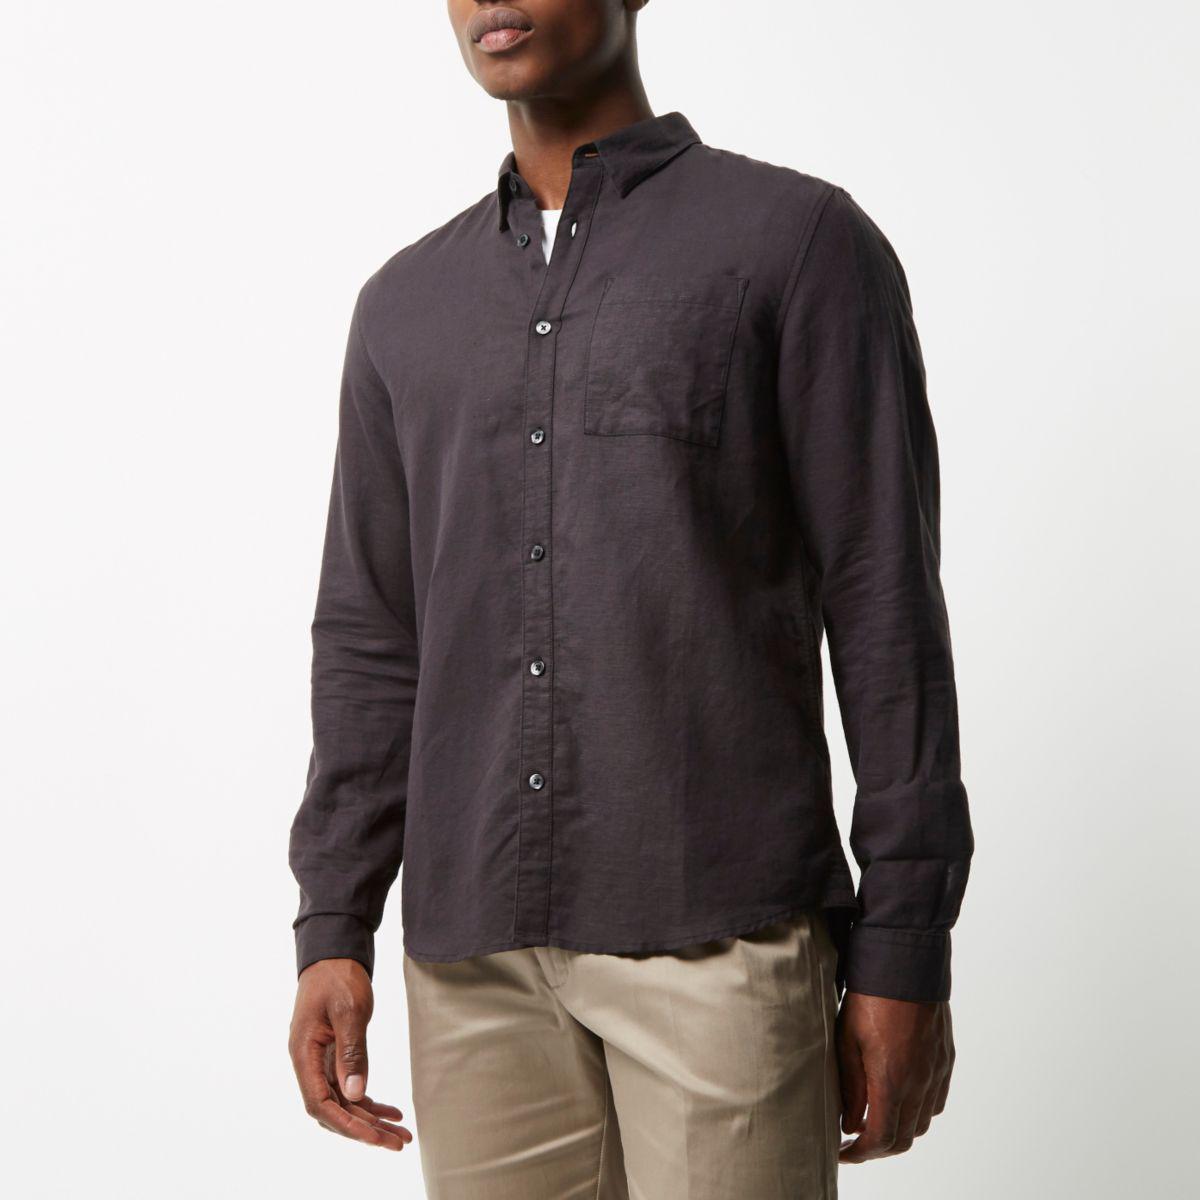 Lyst - River Island Black Linen-rich Shirt in Black for Men